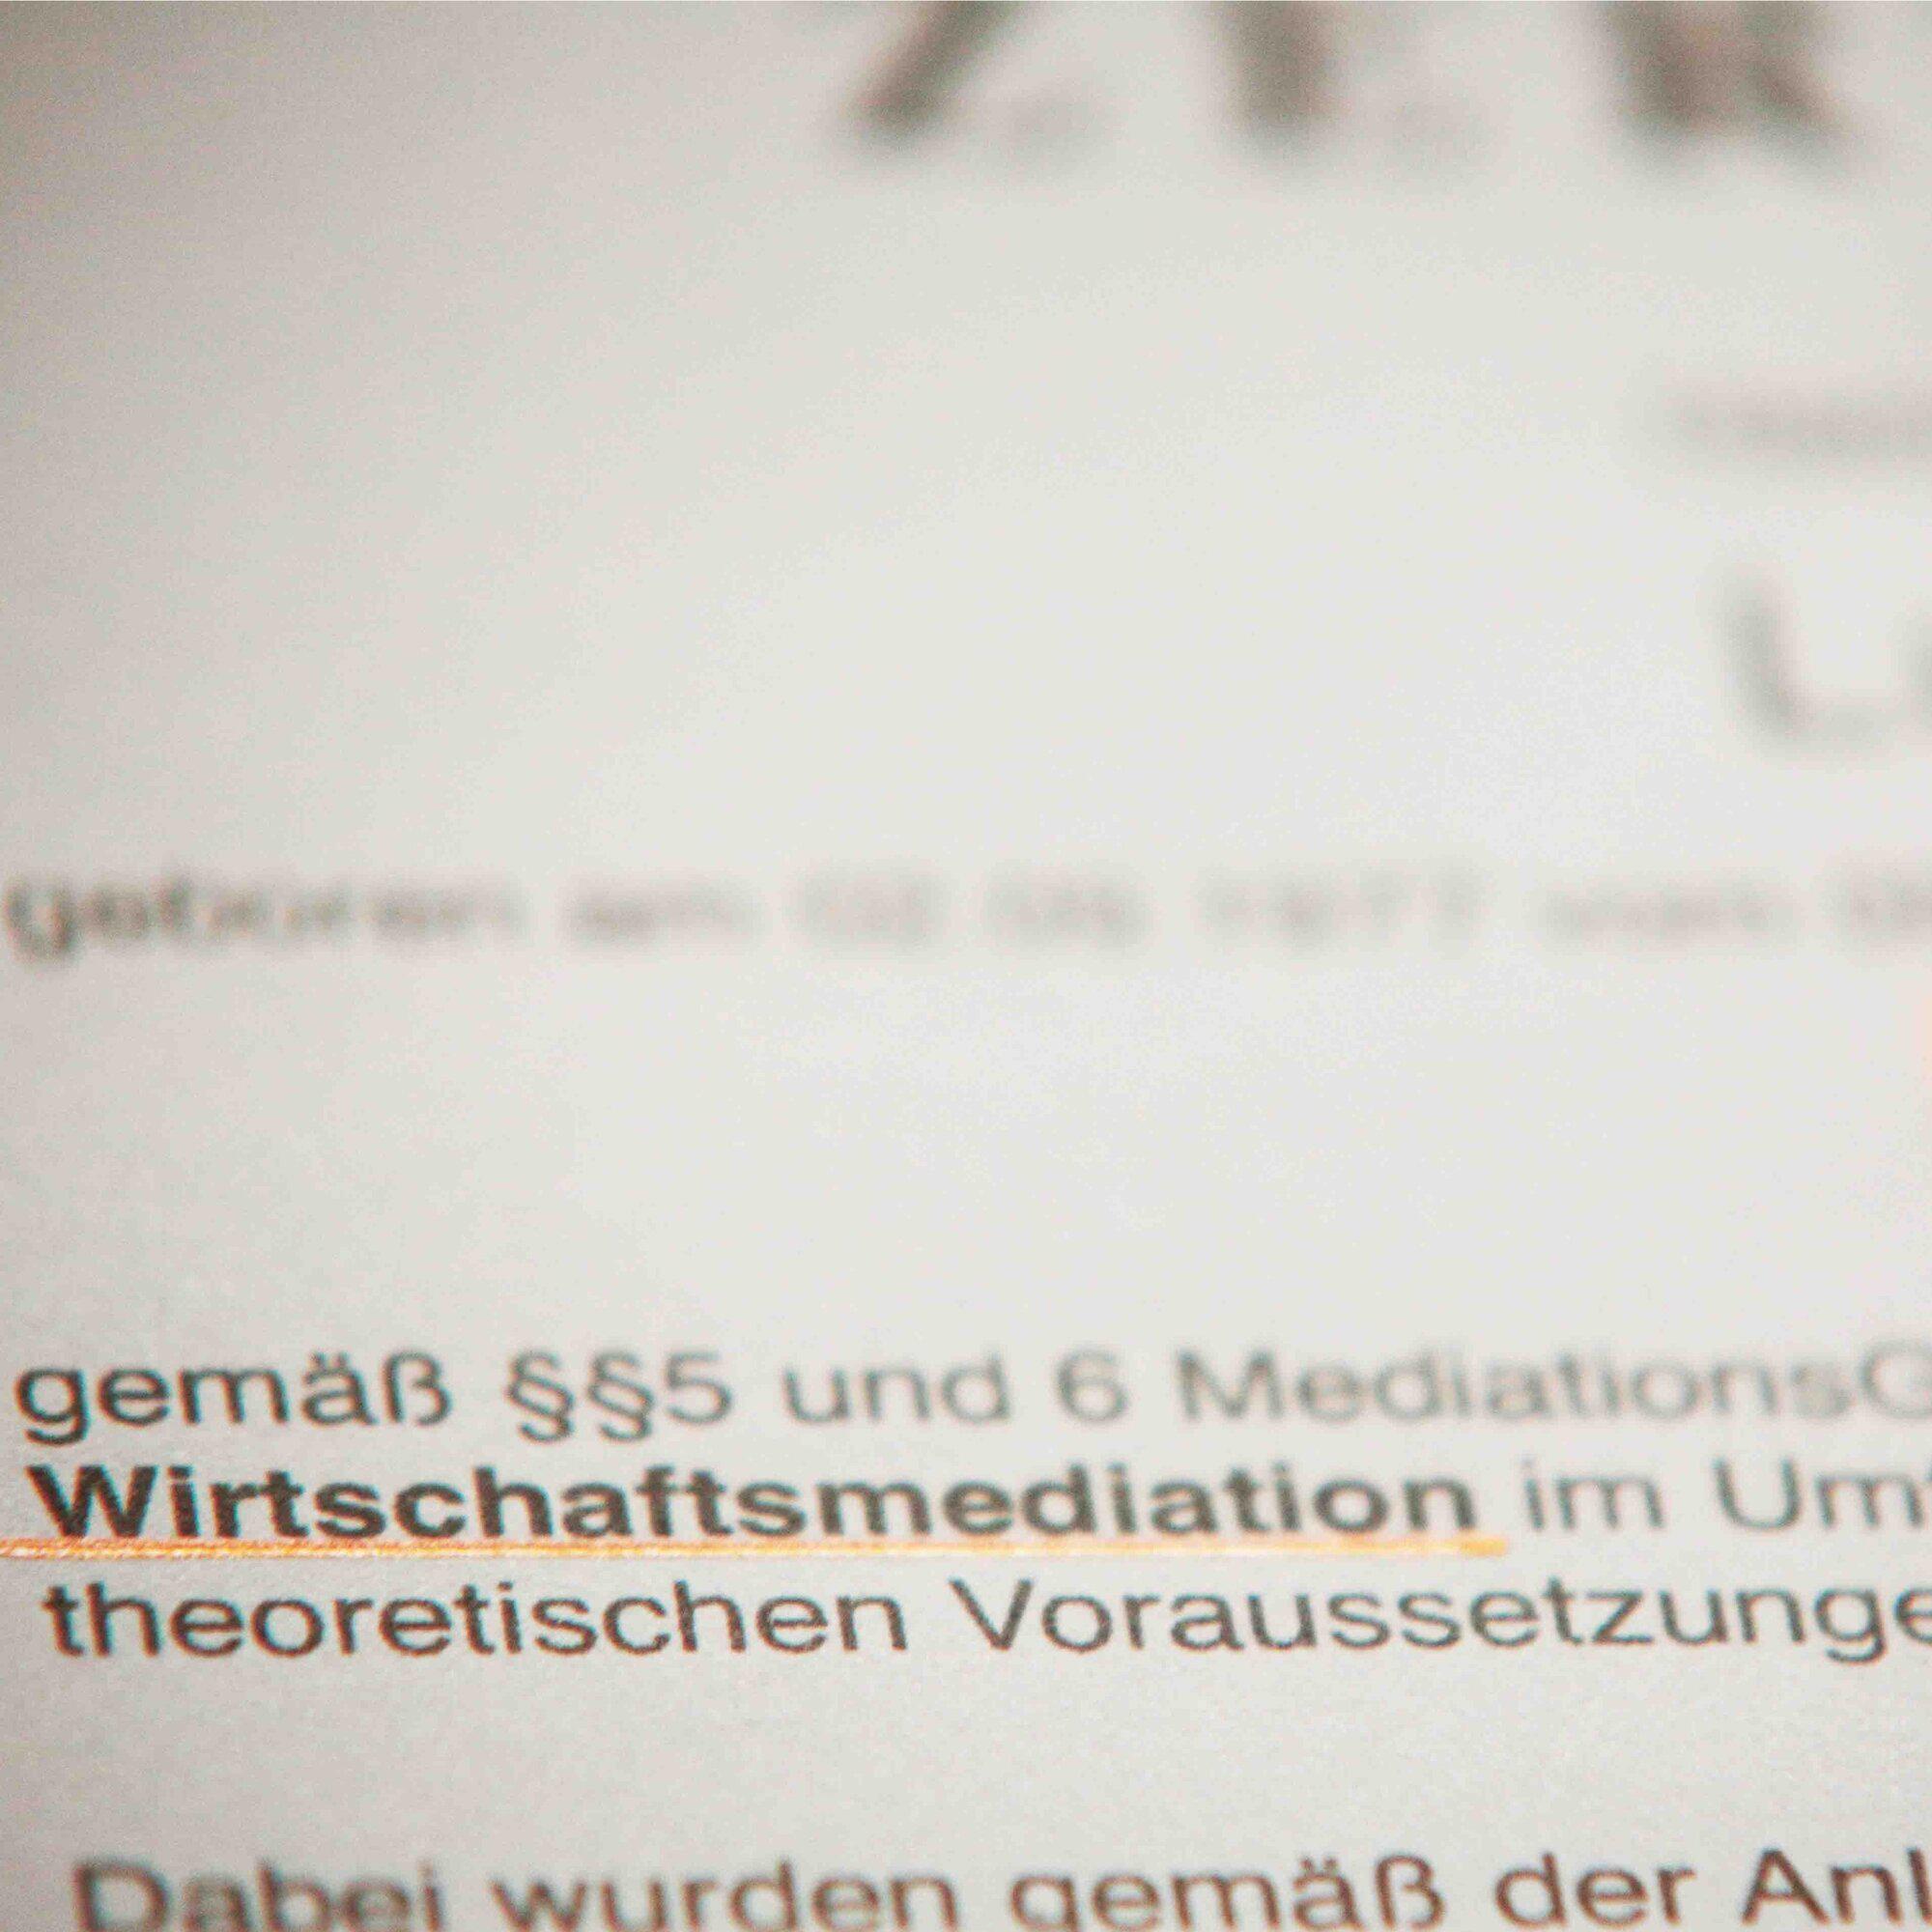 Mach-Mediation.de - Mediator Lukas Welker, Mörikestraße 6 in Nürnberg